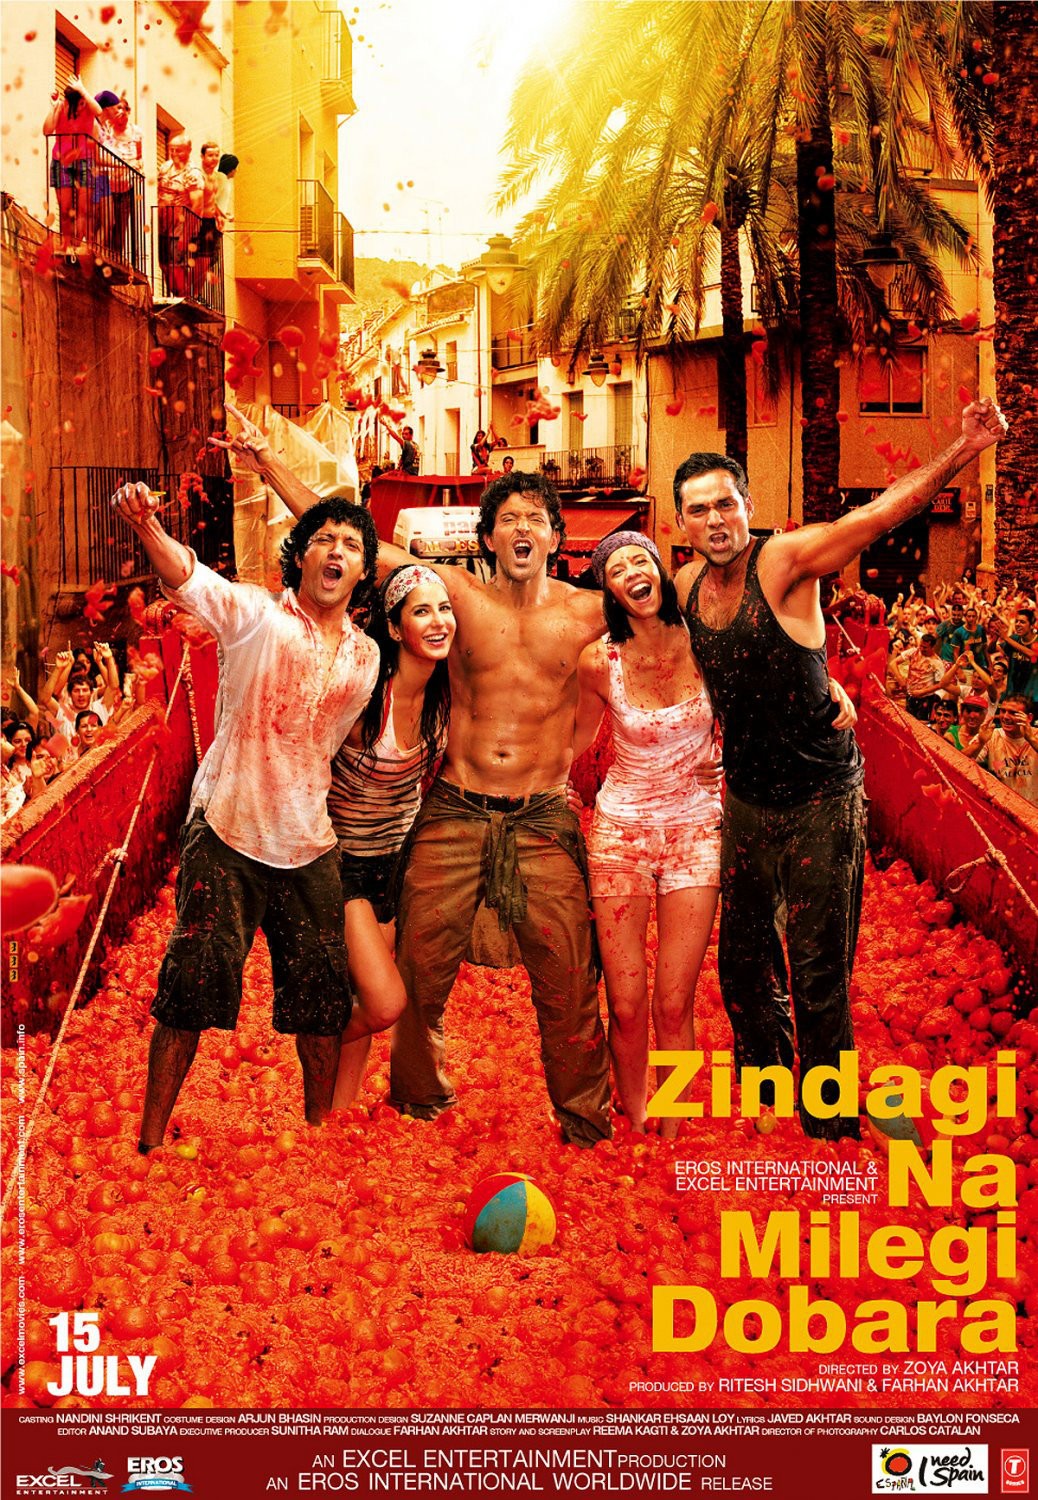 Poster of Eros Entertainment's Zindagi Na Milegi Dobara (2011)